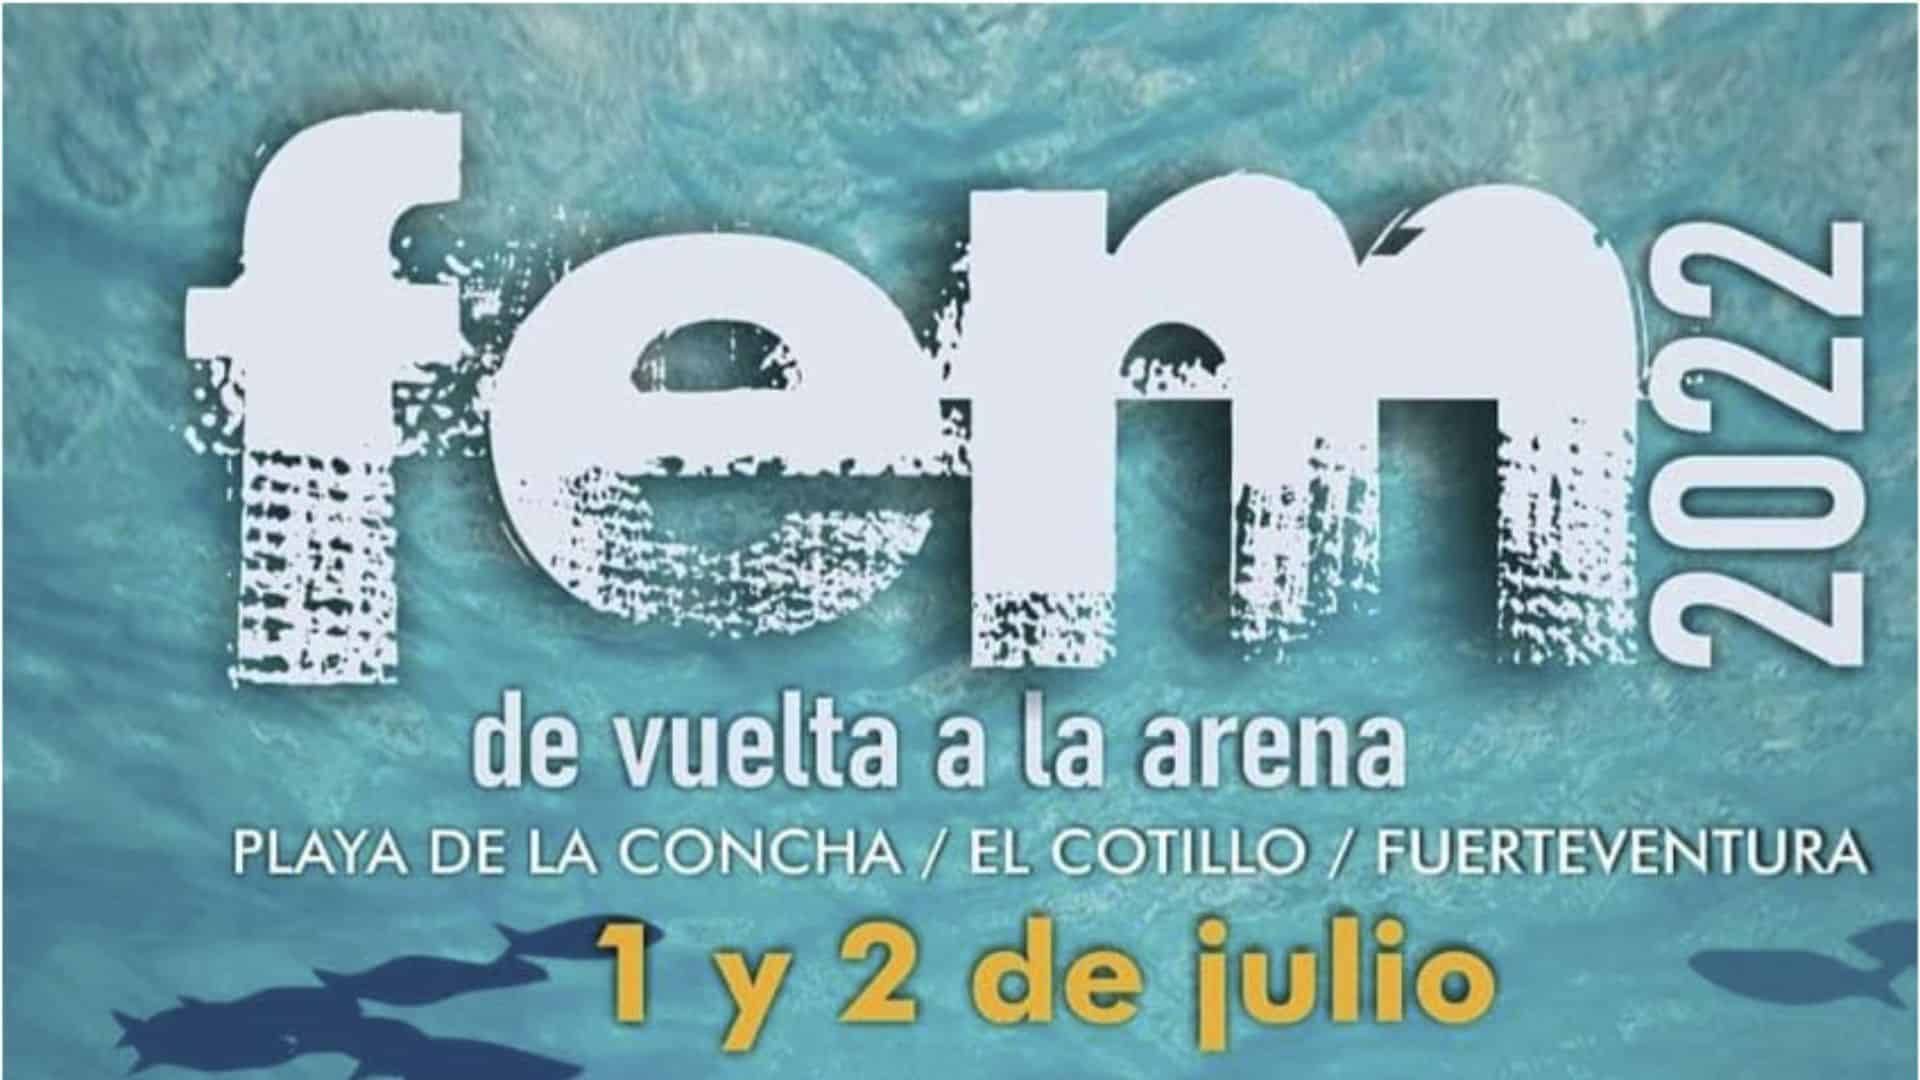 Fuerteventura en Music (FEM) Festival 2022